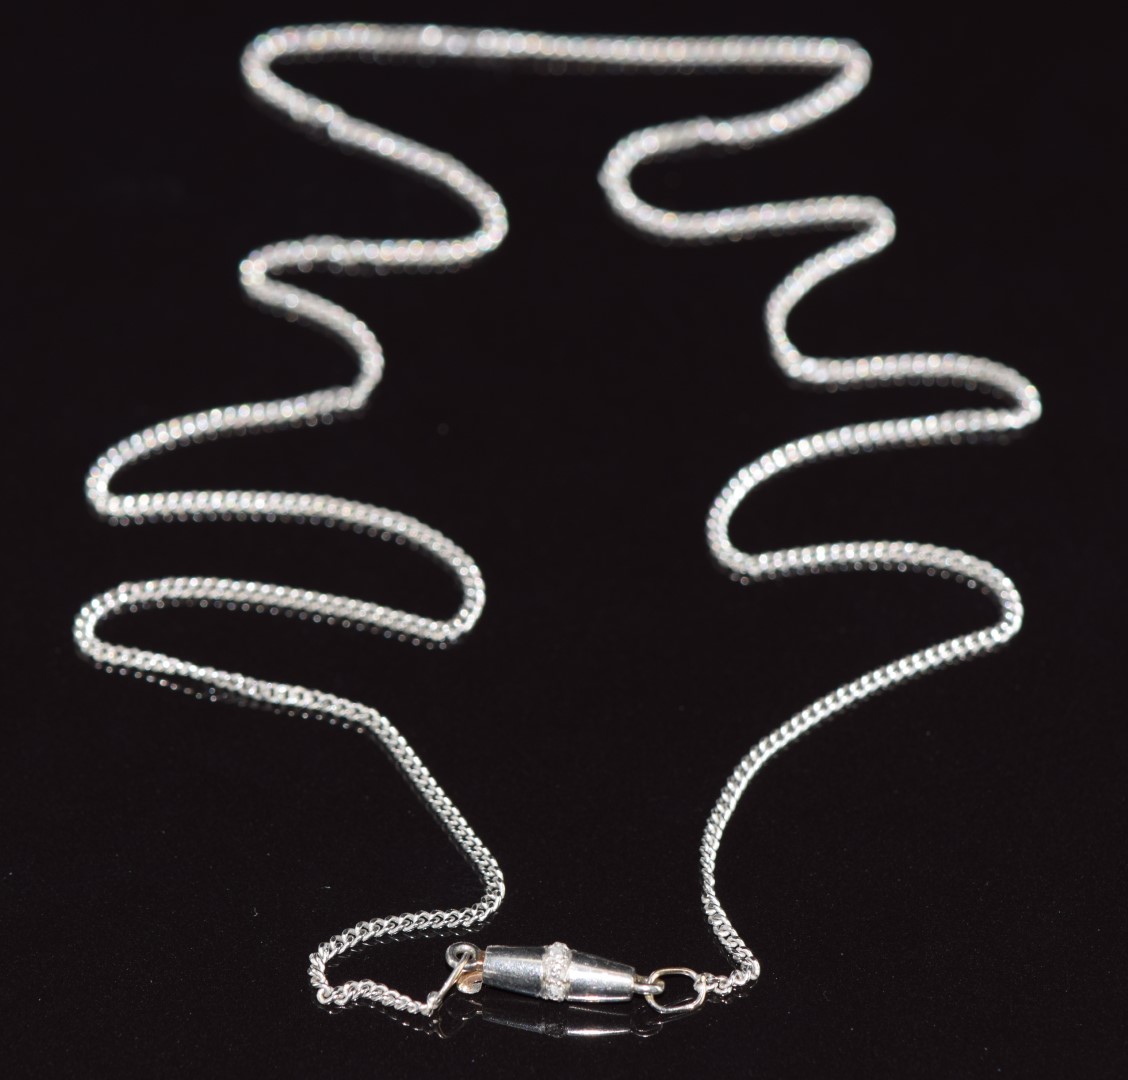 A platinum / 18ct white gold chain, the barrel clasp set with rose cut diamonds, 44cm long, 3.1g